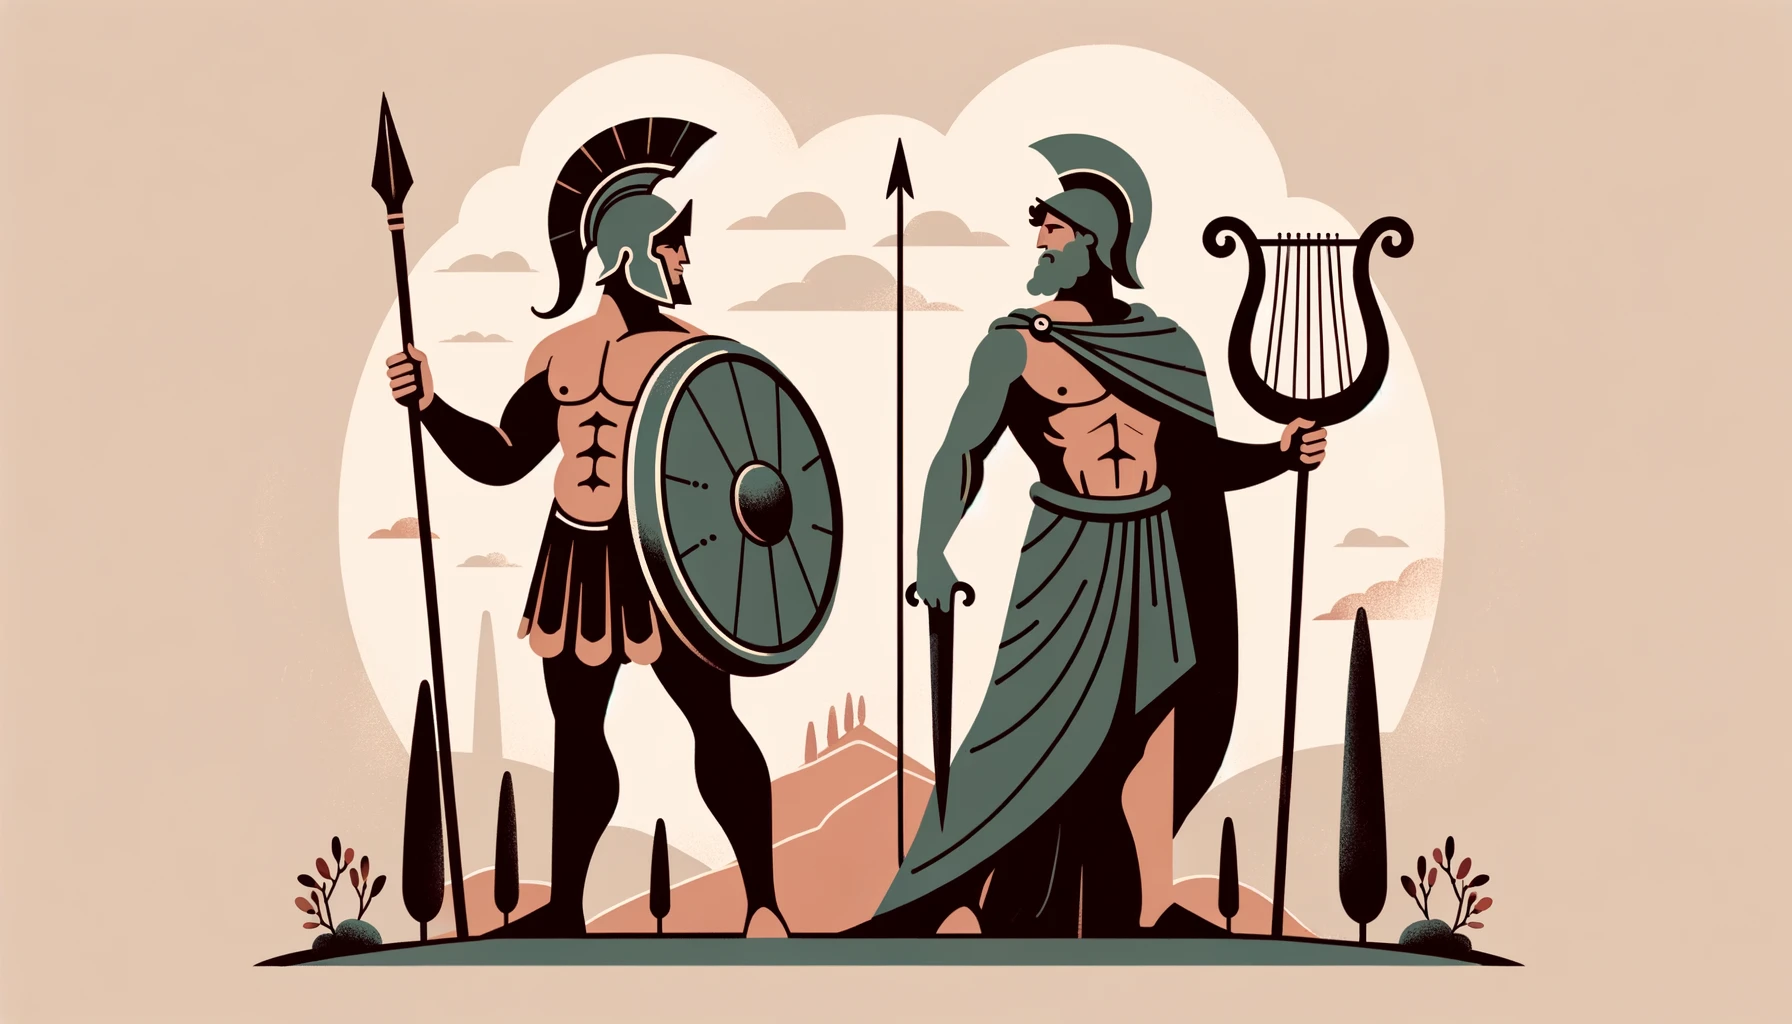 Achilles vs Orpheus: The Warrior meets The Bard